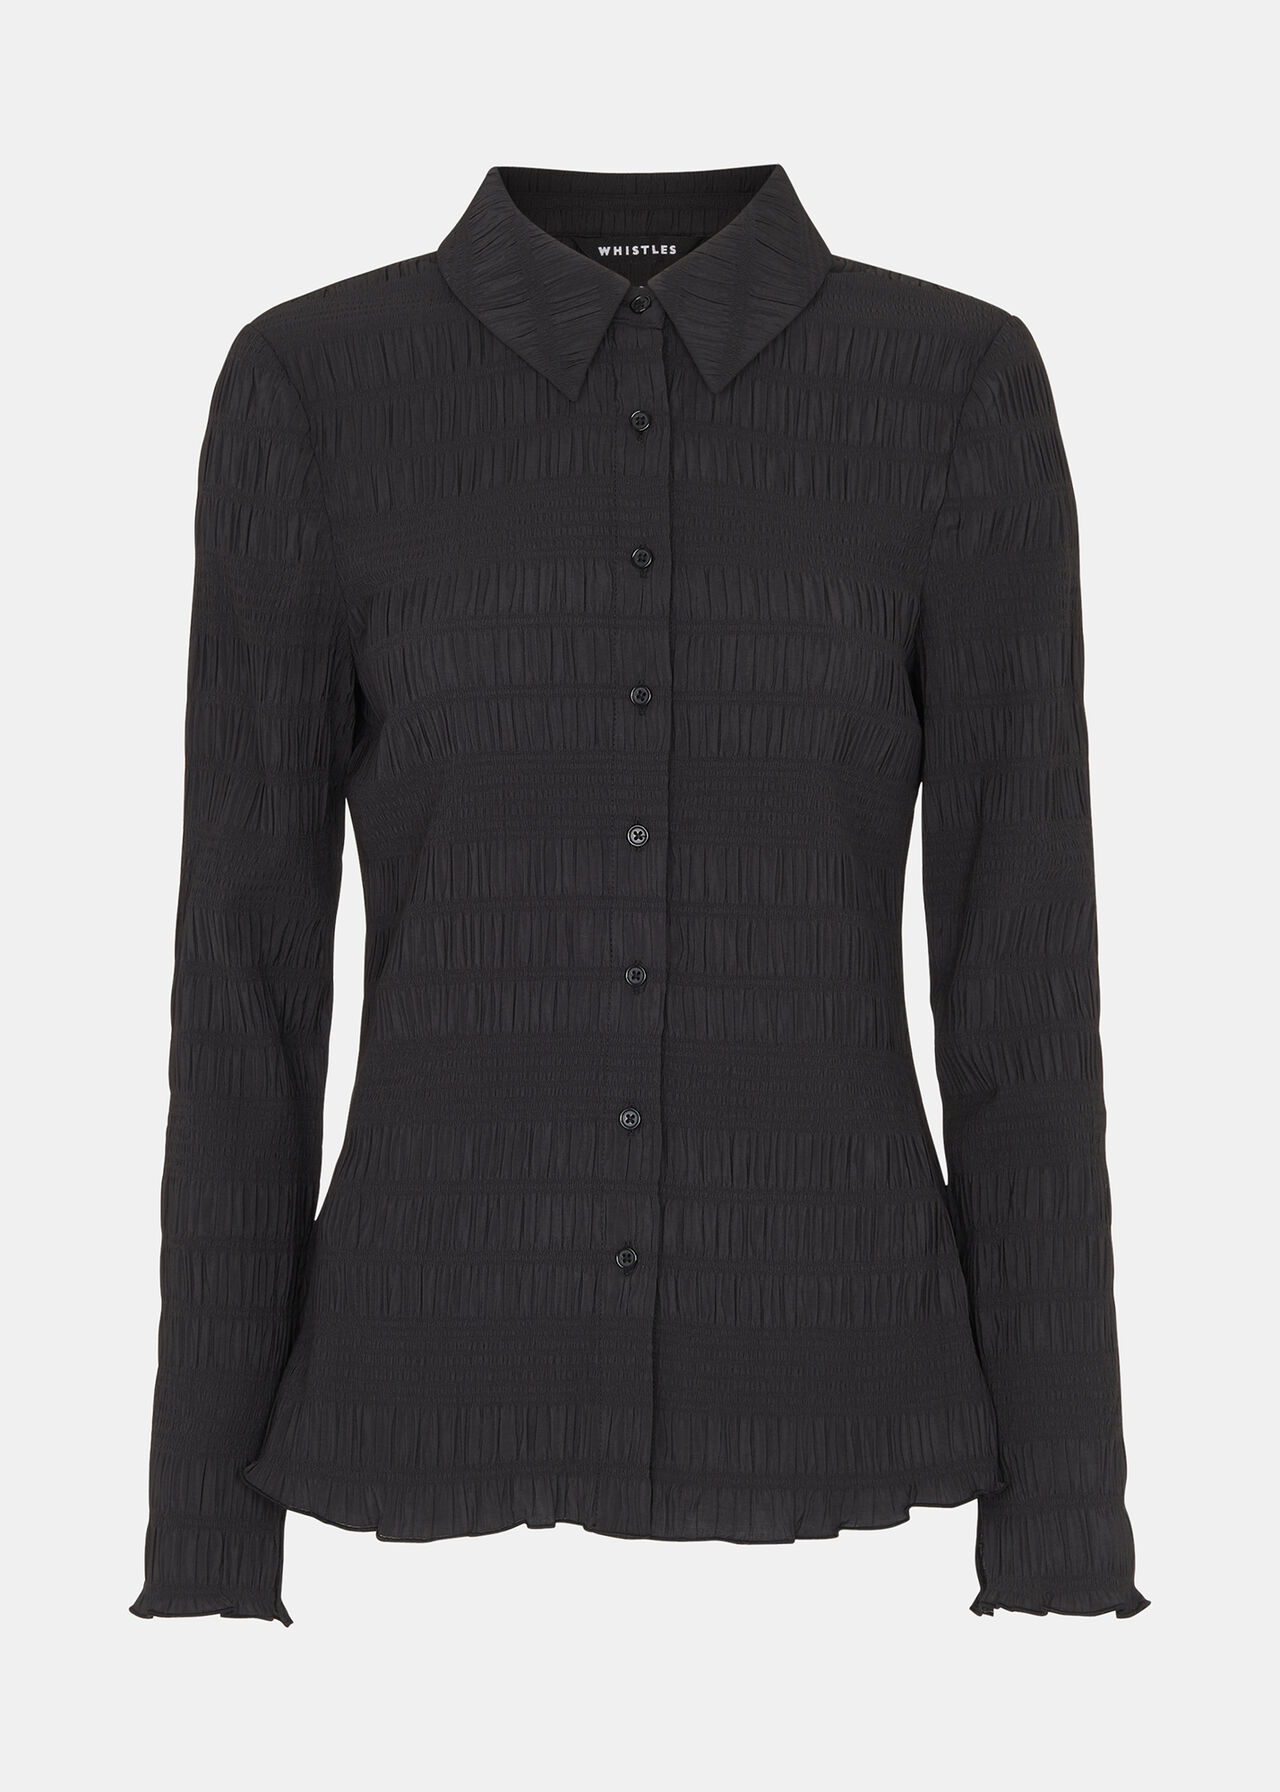 Whistles Black Plisse Shirt | Sleek Modern Essential | Order Now